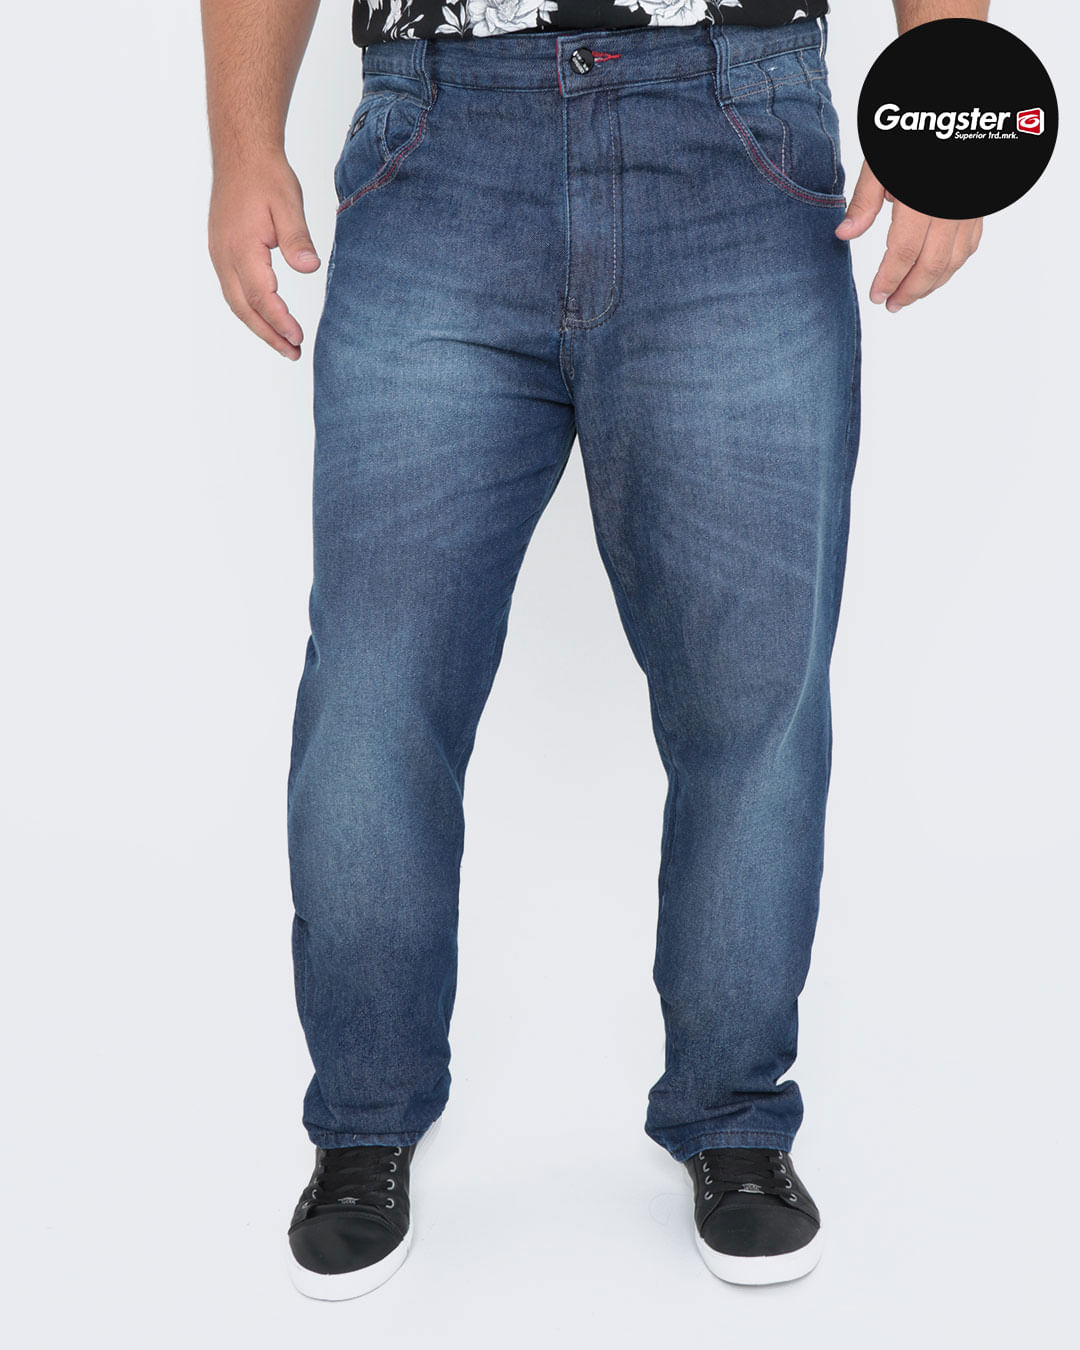 Calca-Jeans-Masculina-Plus-Size-Gangster-Azul-Escuro